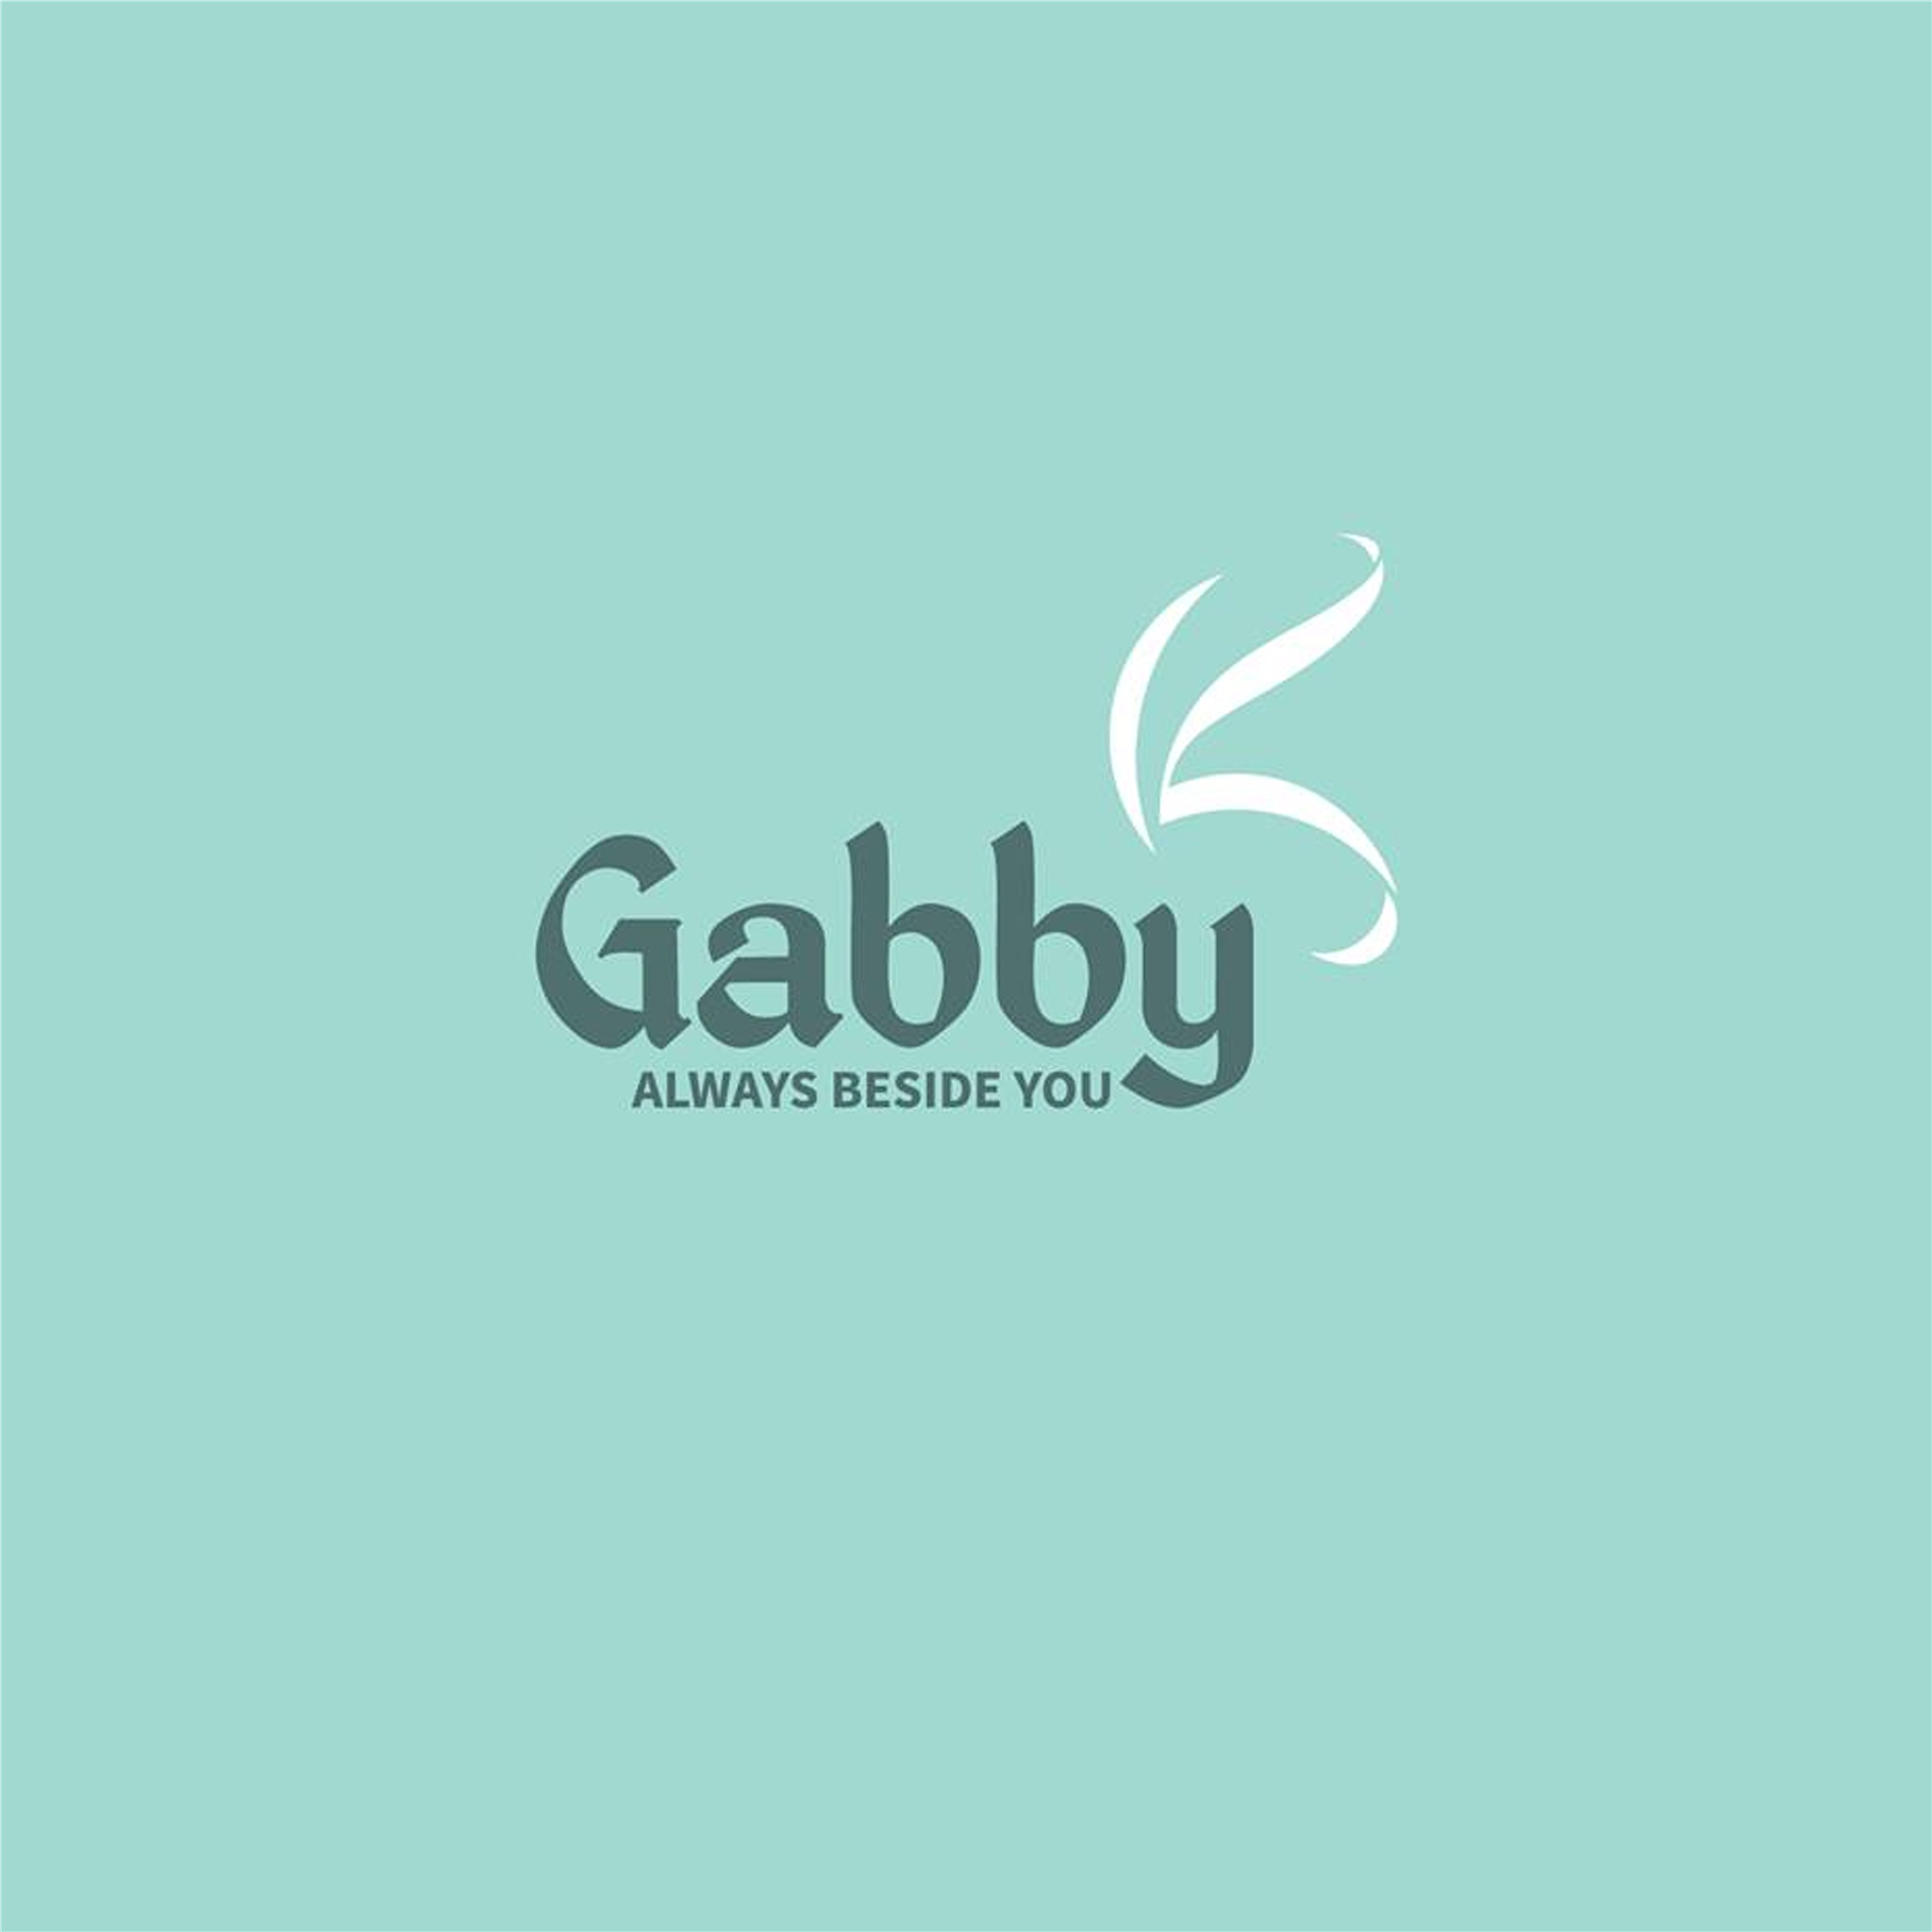 LOGO-GABBY-900X900